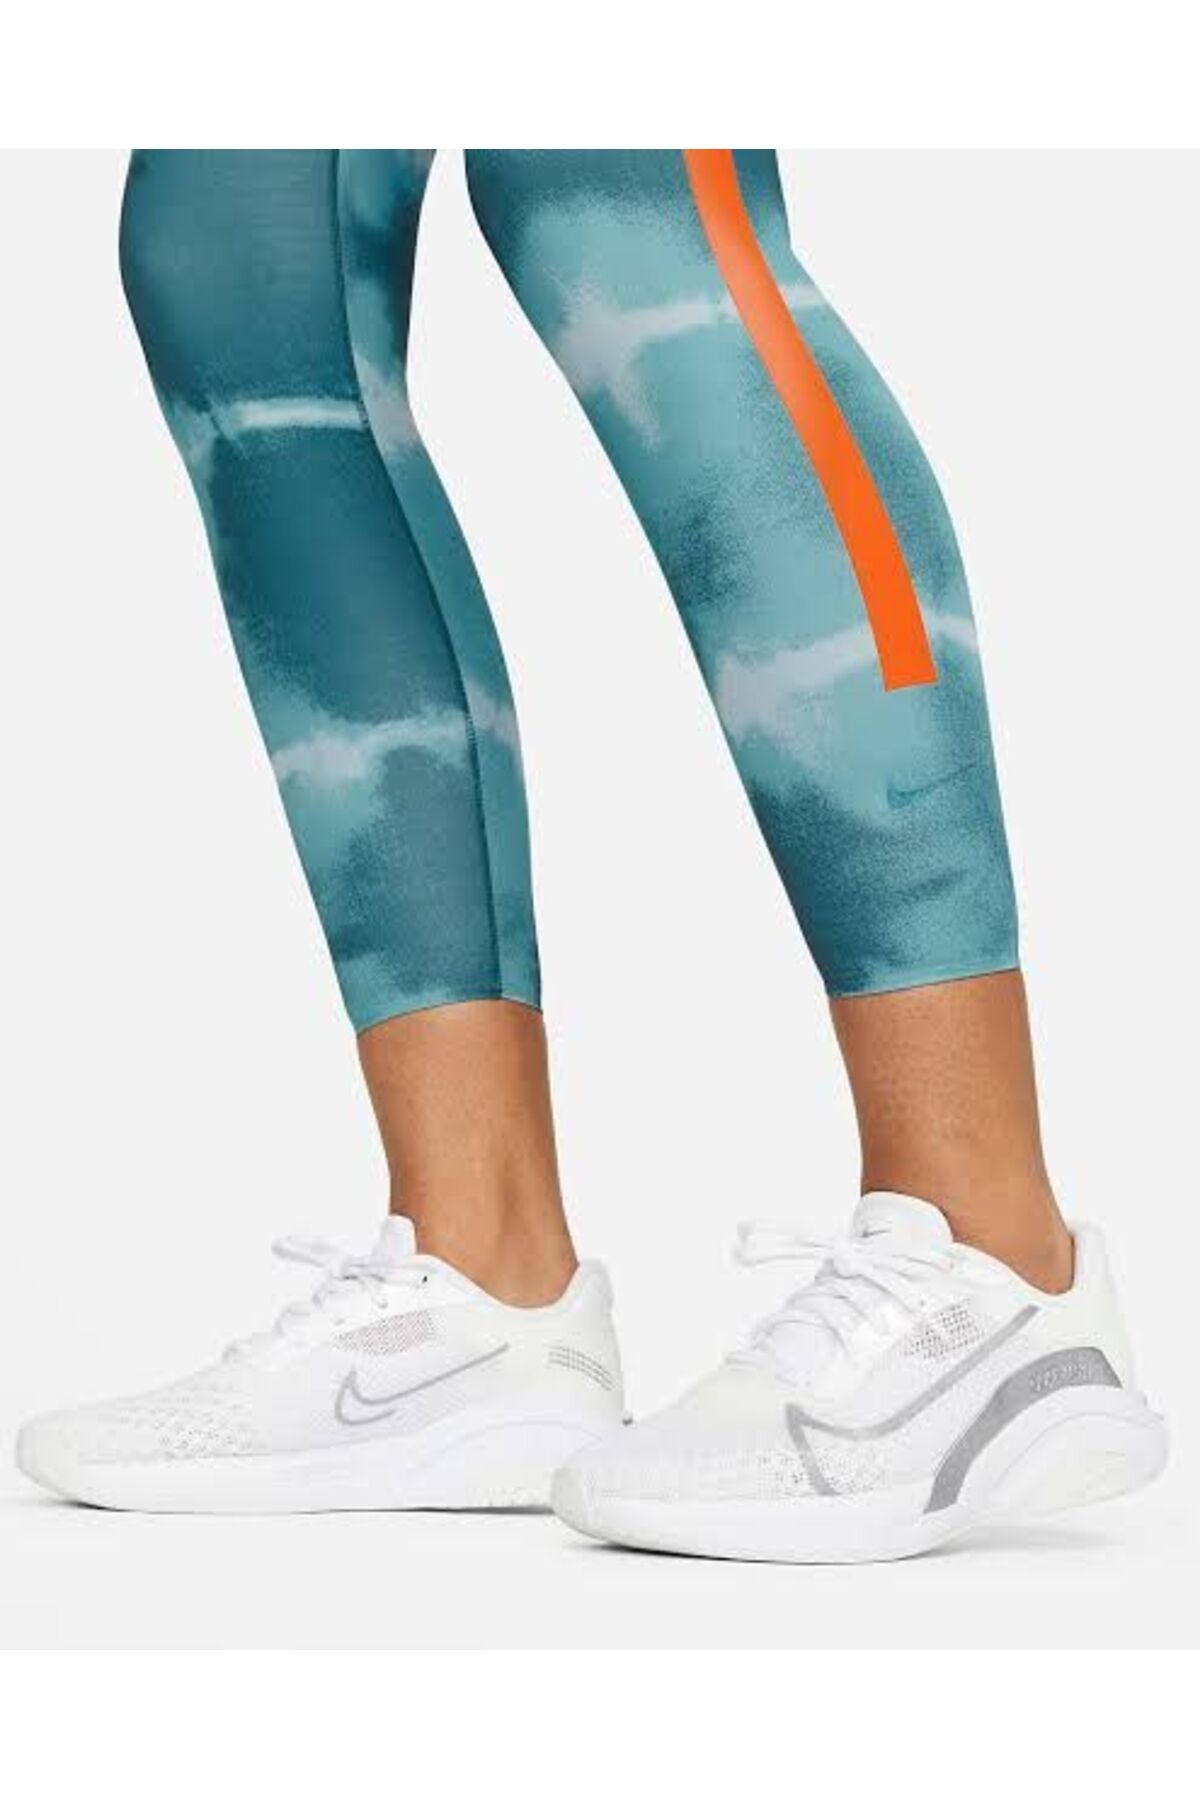 Nike One Luxe Mid-Rise Printed Training Kadın Tayt stilim spor